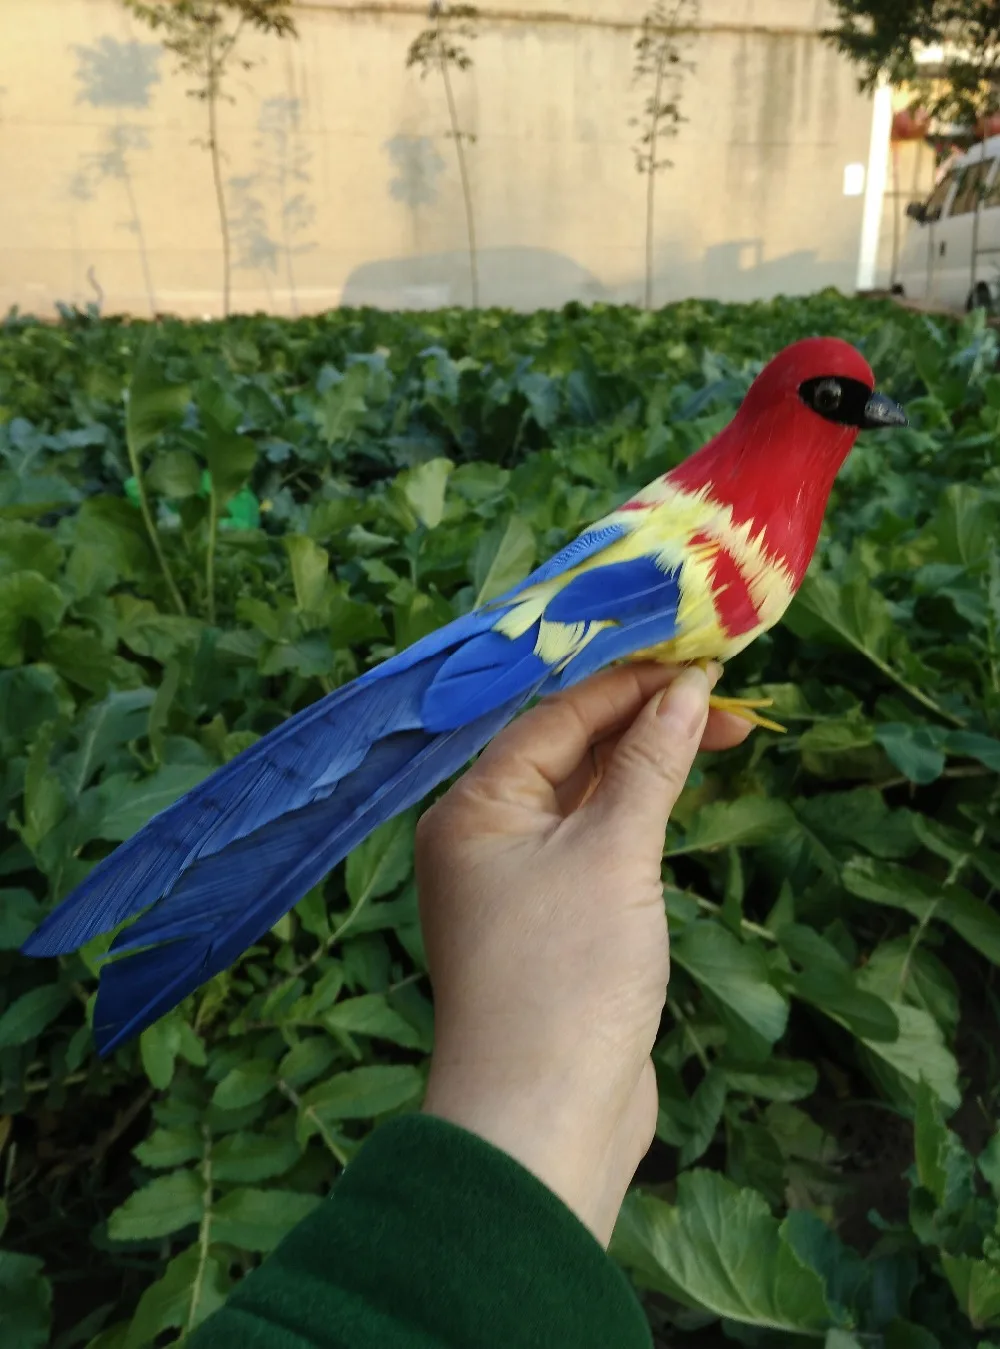 

simulation bird colourful feathers bird about 22cm magpie model handicraft prop,home garden decoration gift p2113